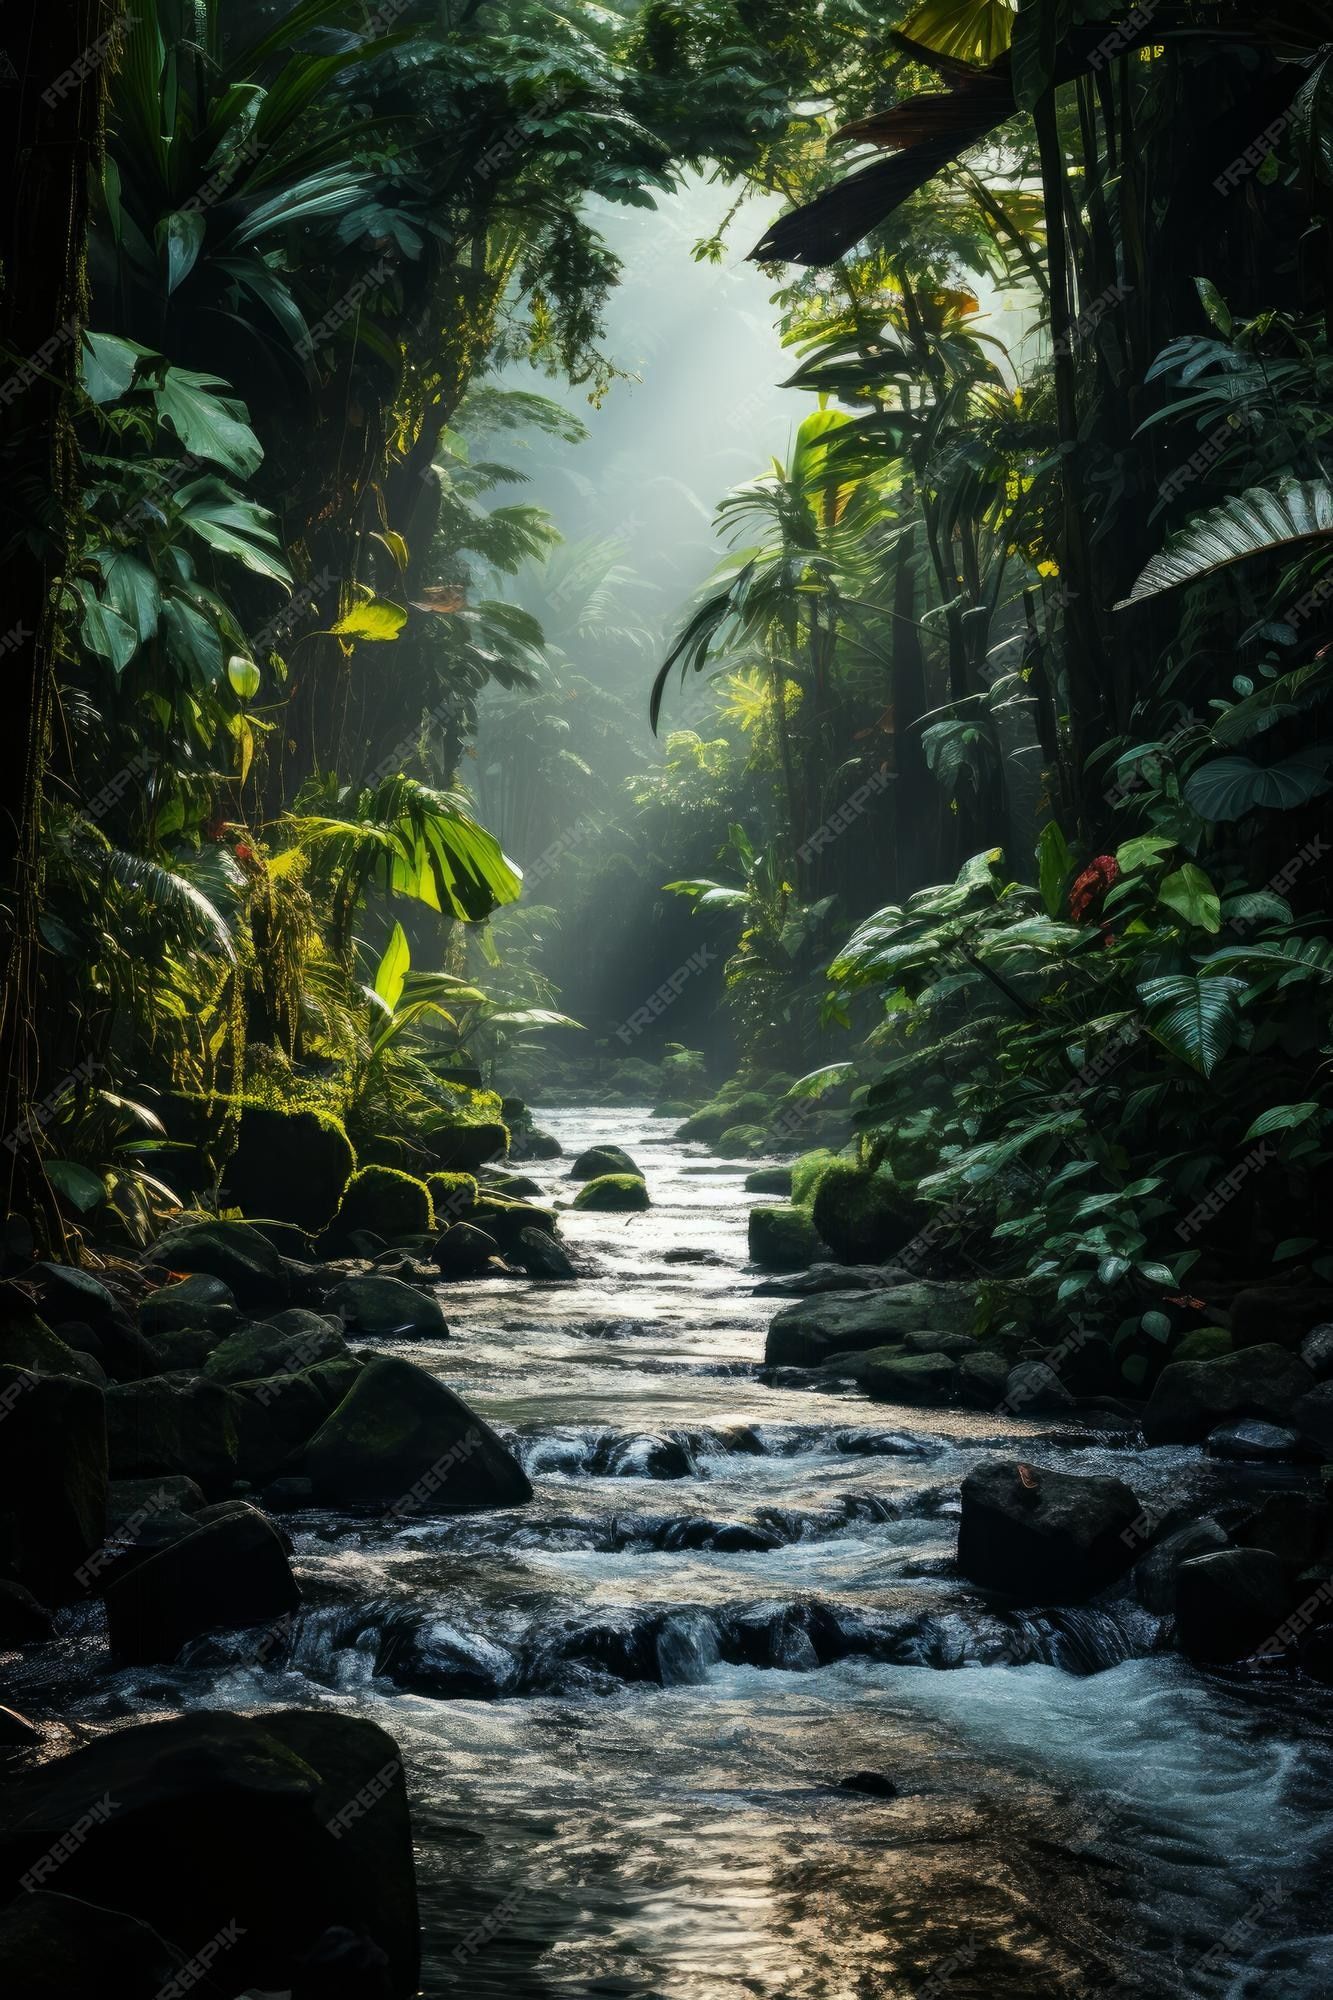 Rainforest Wallpaper Image